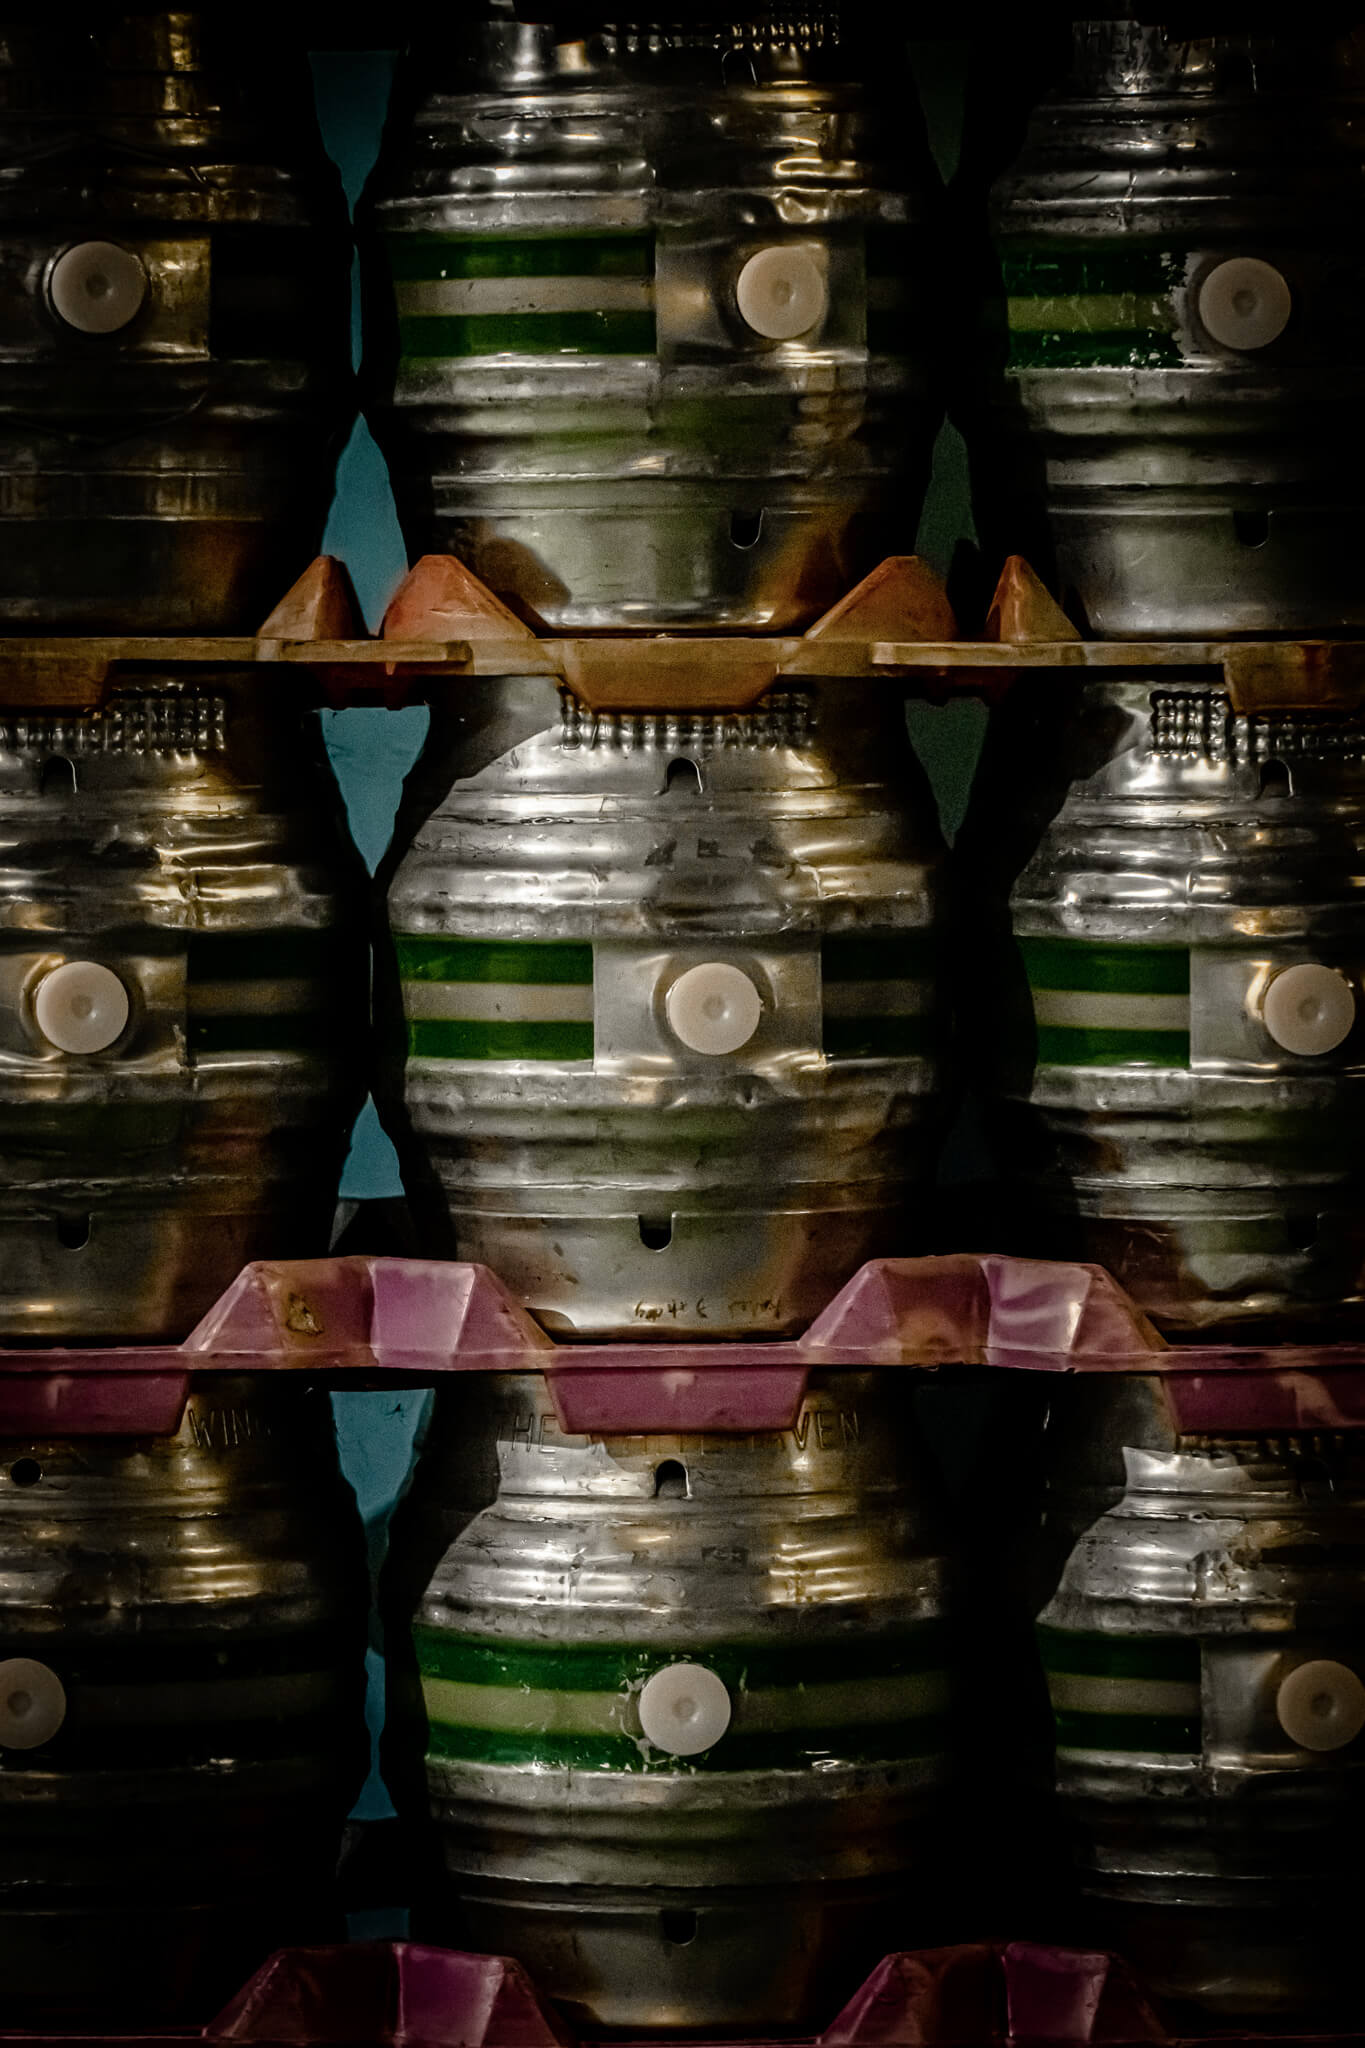 Ennerdale Brewery casks in warehouse